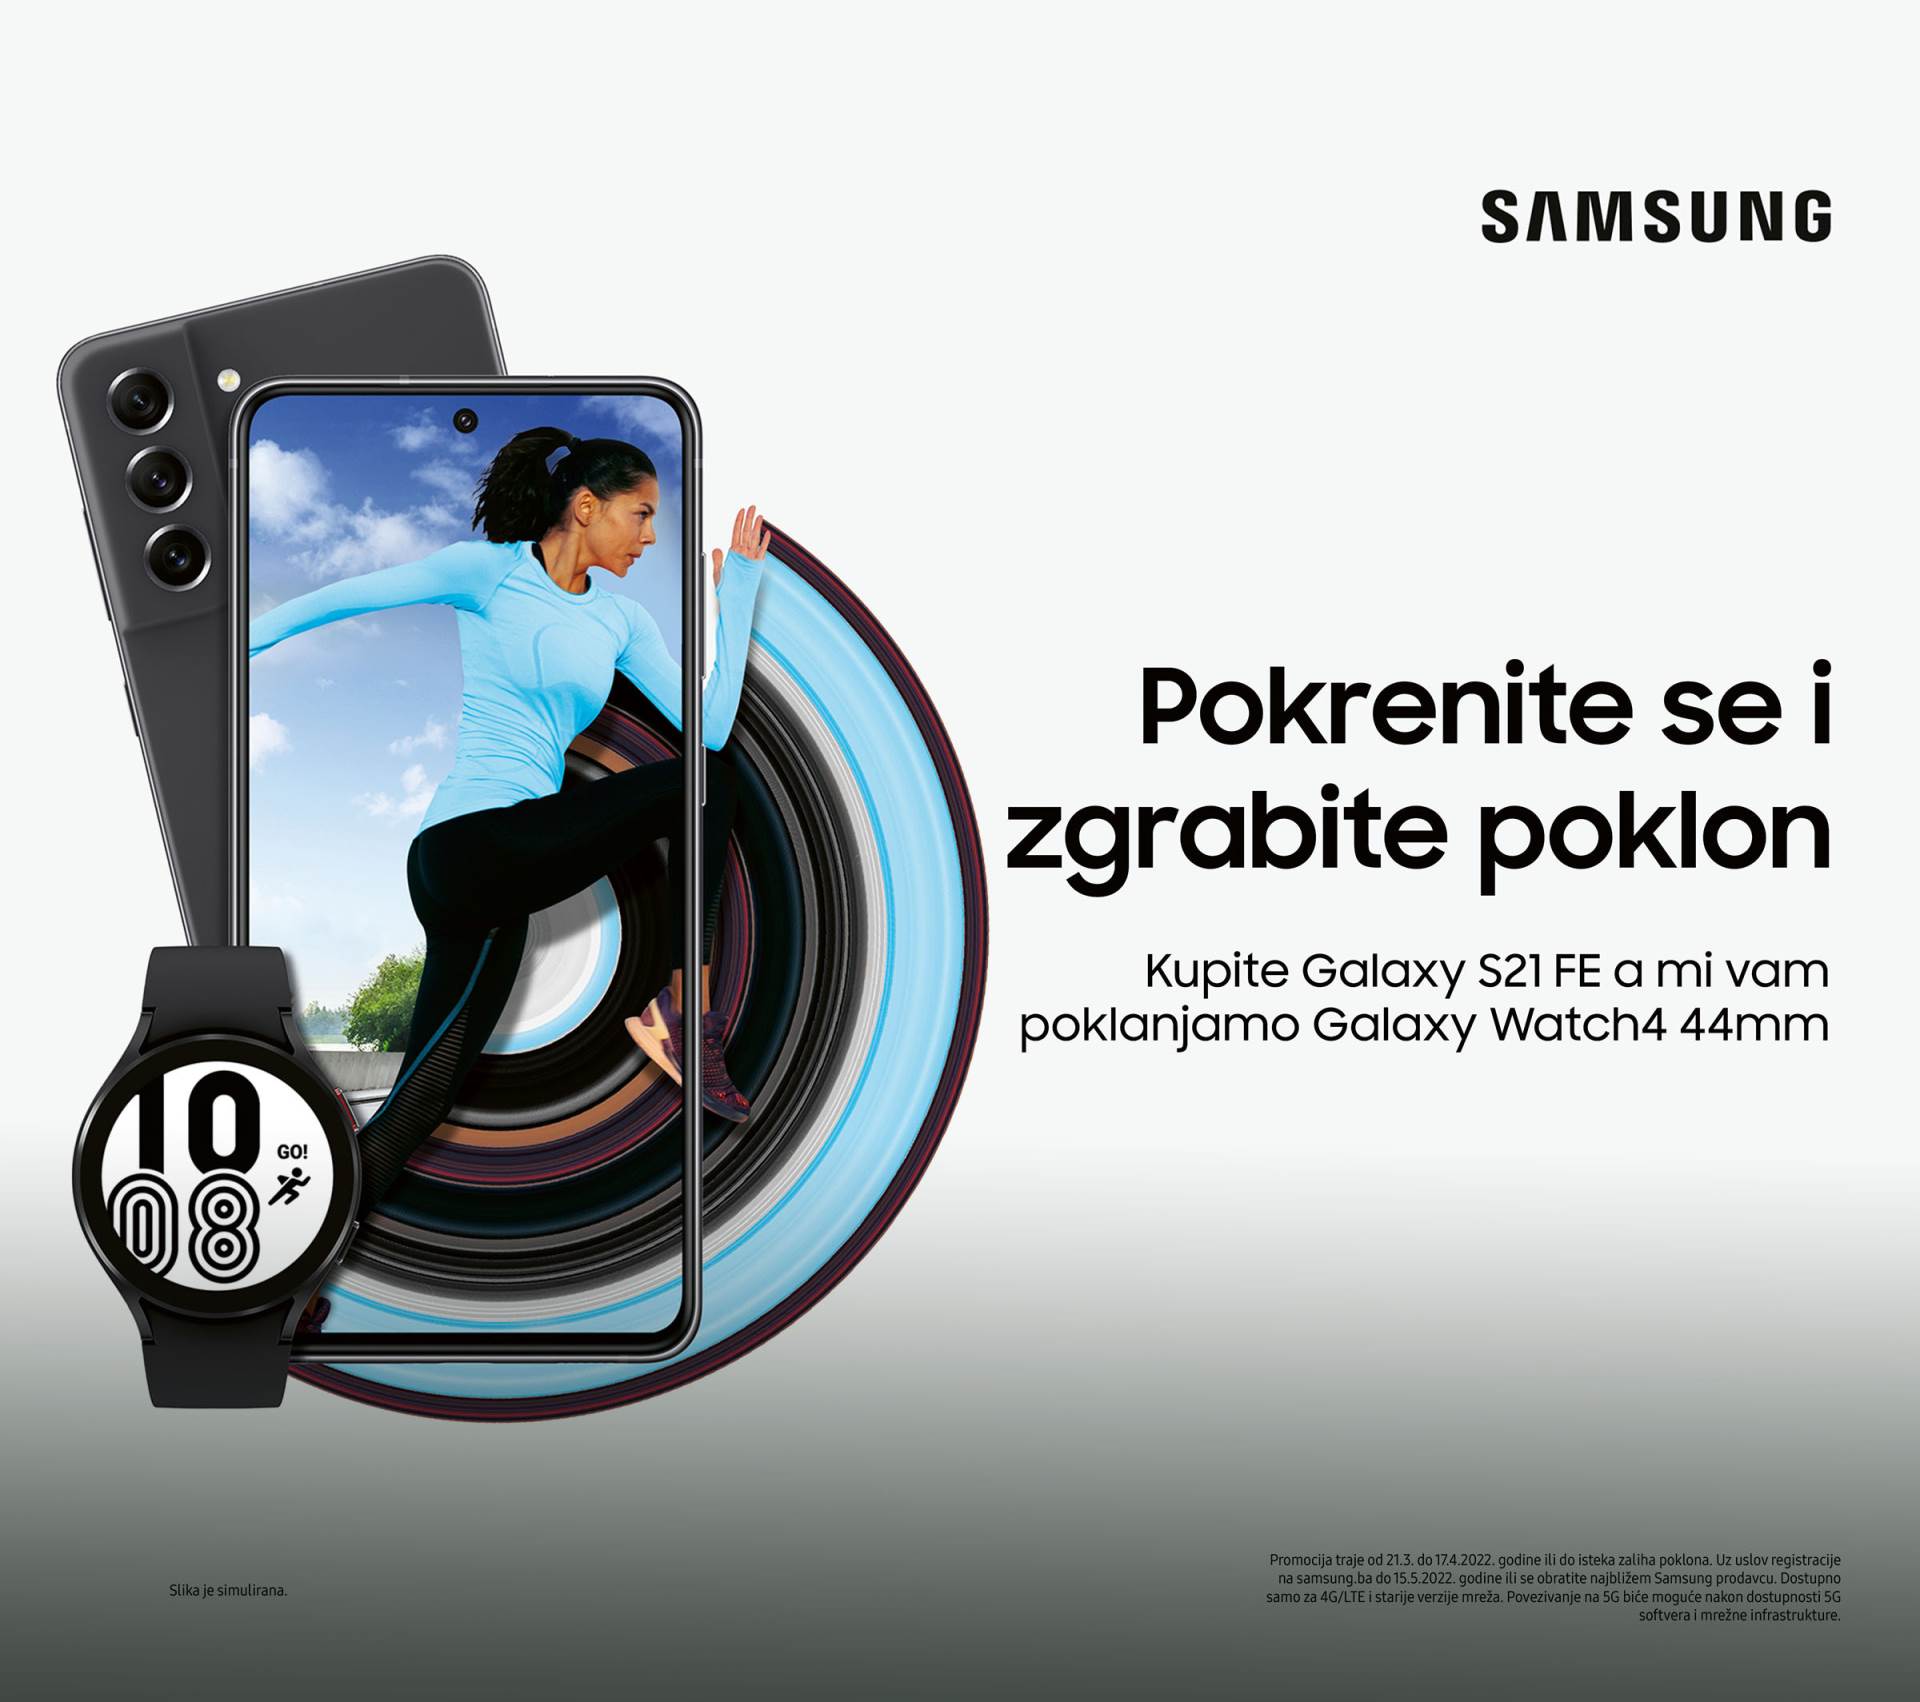  Samsung Galaxy s21 FE u m:tel ponudi 